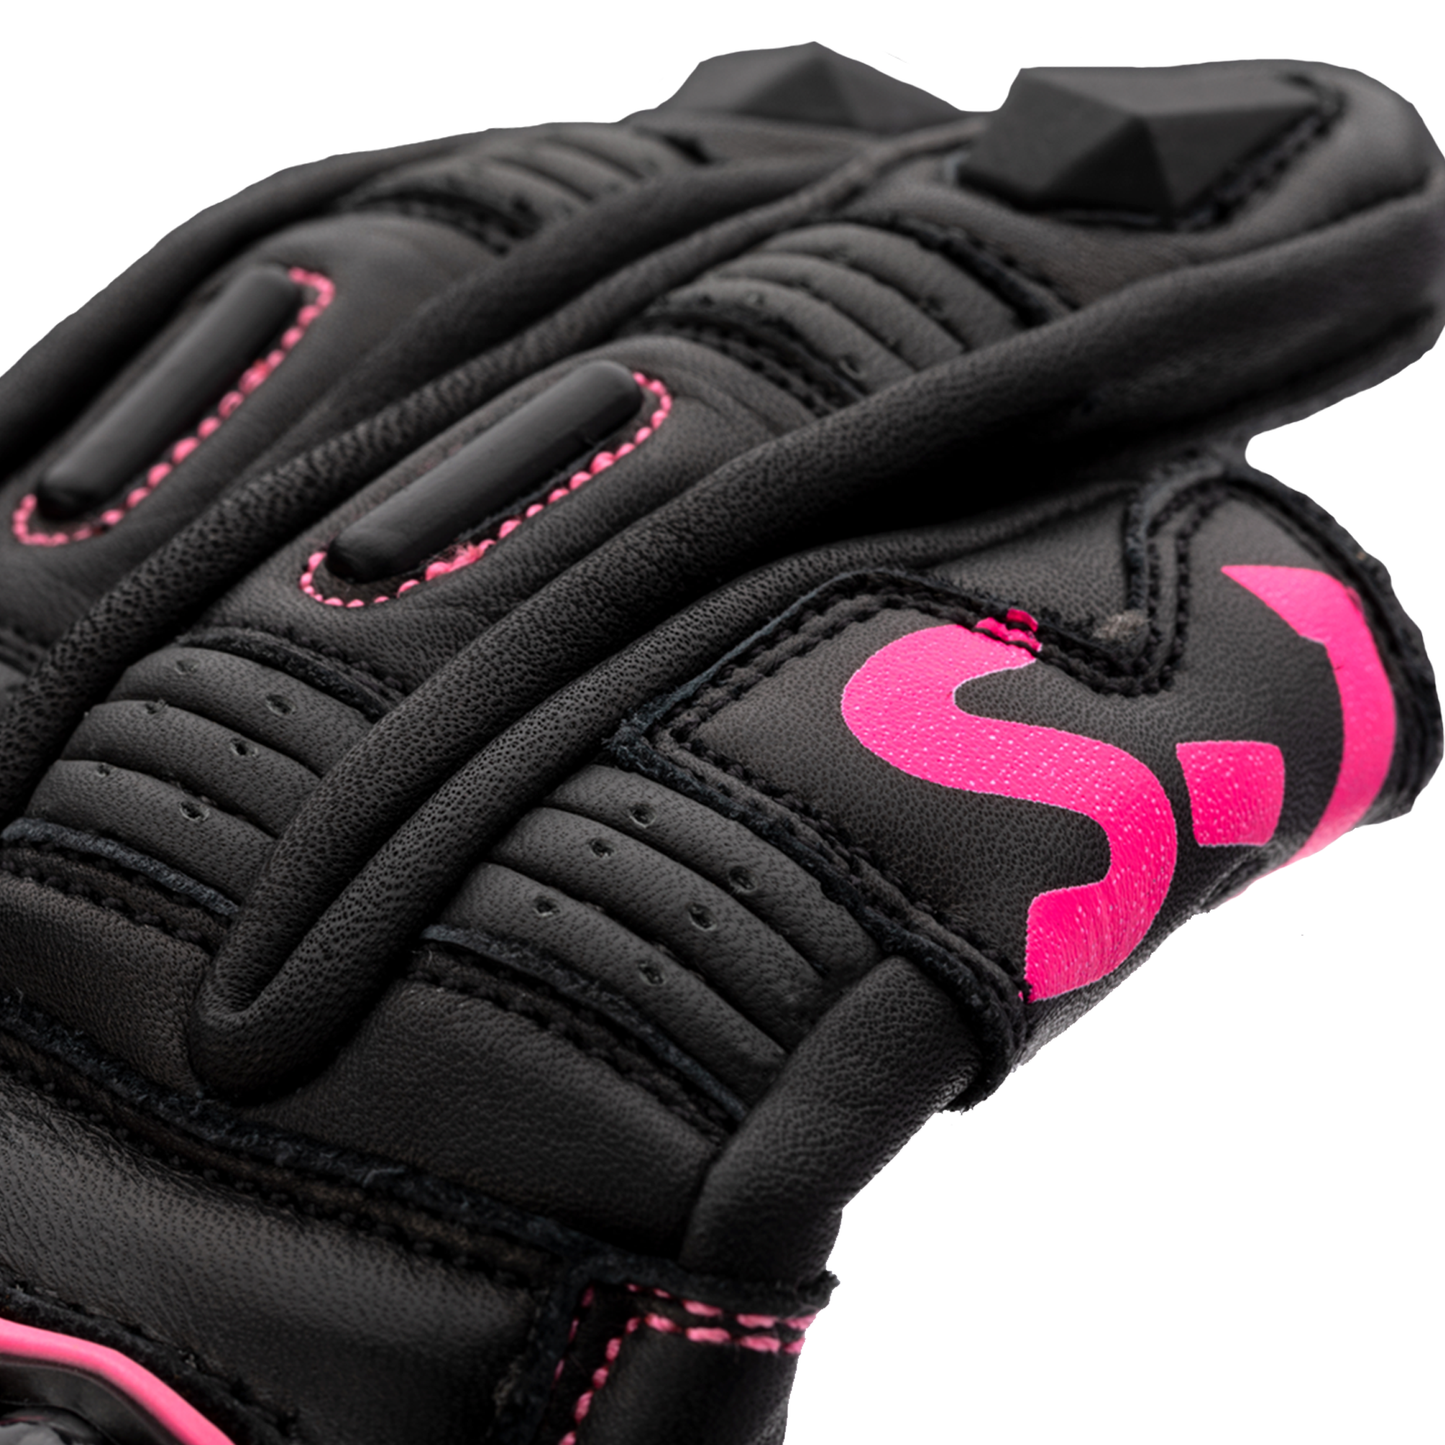 RST S1 CE Ladies Gloves - Black/Neon Pink (3060)